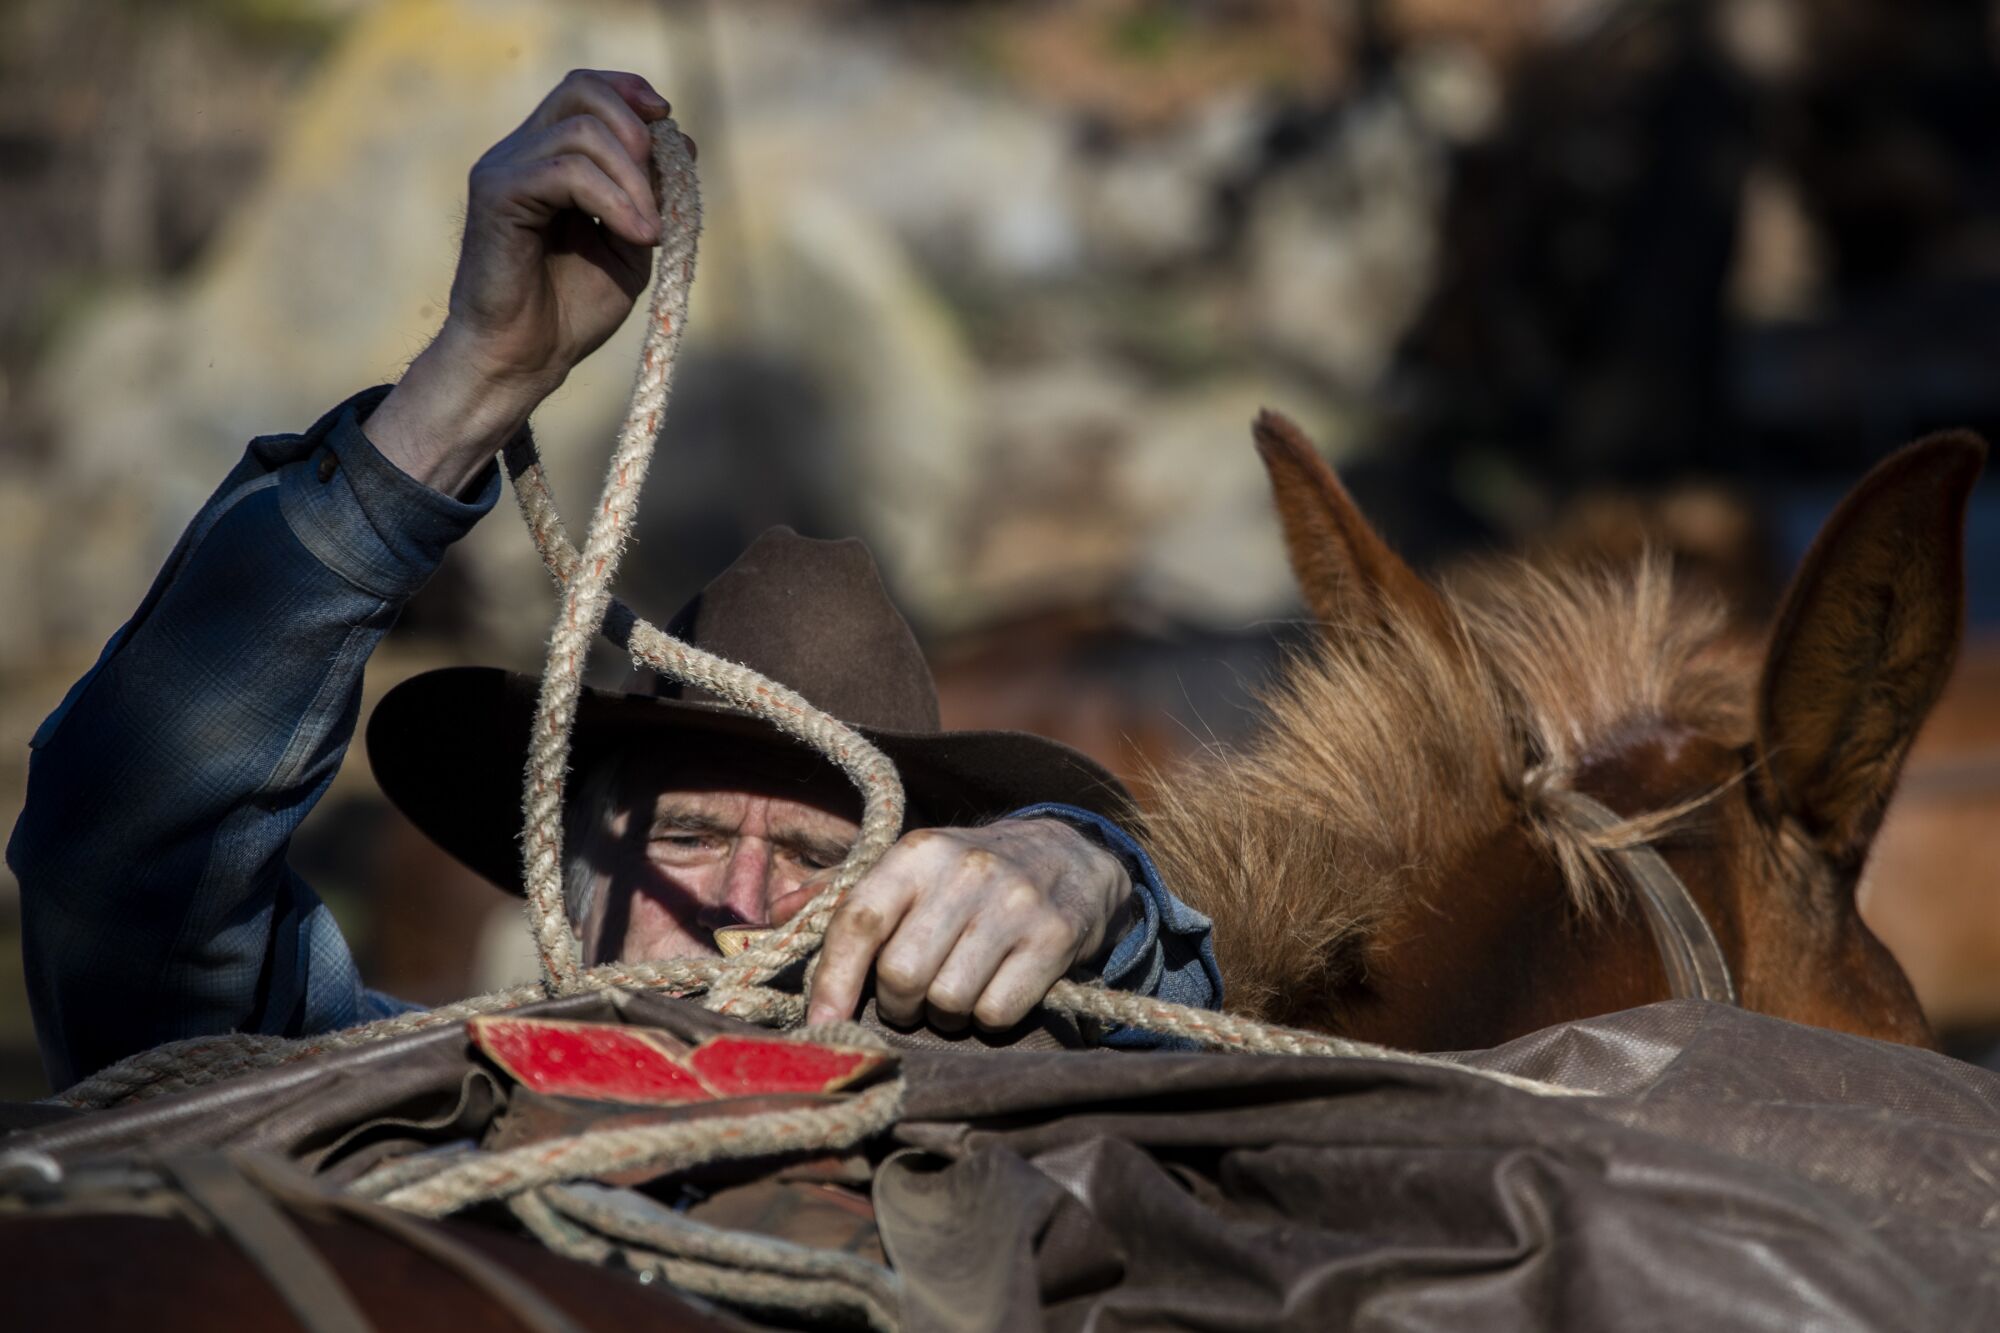 Doug Smith tying packs on a mule